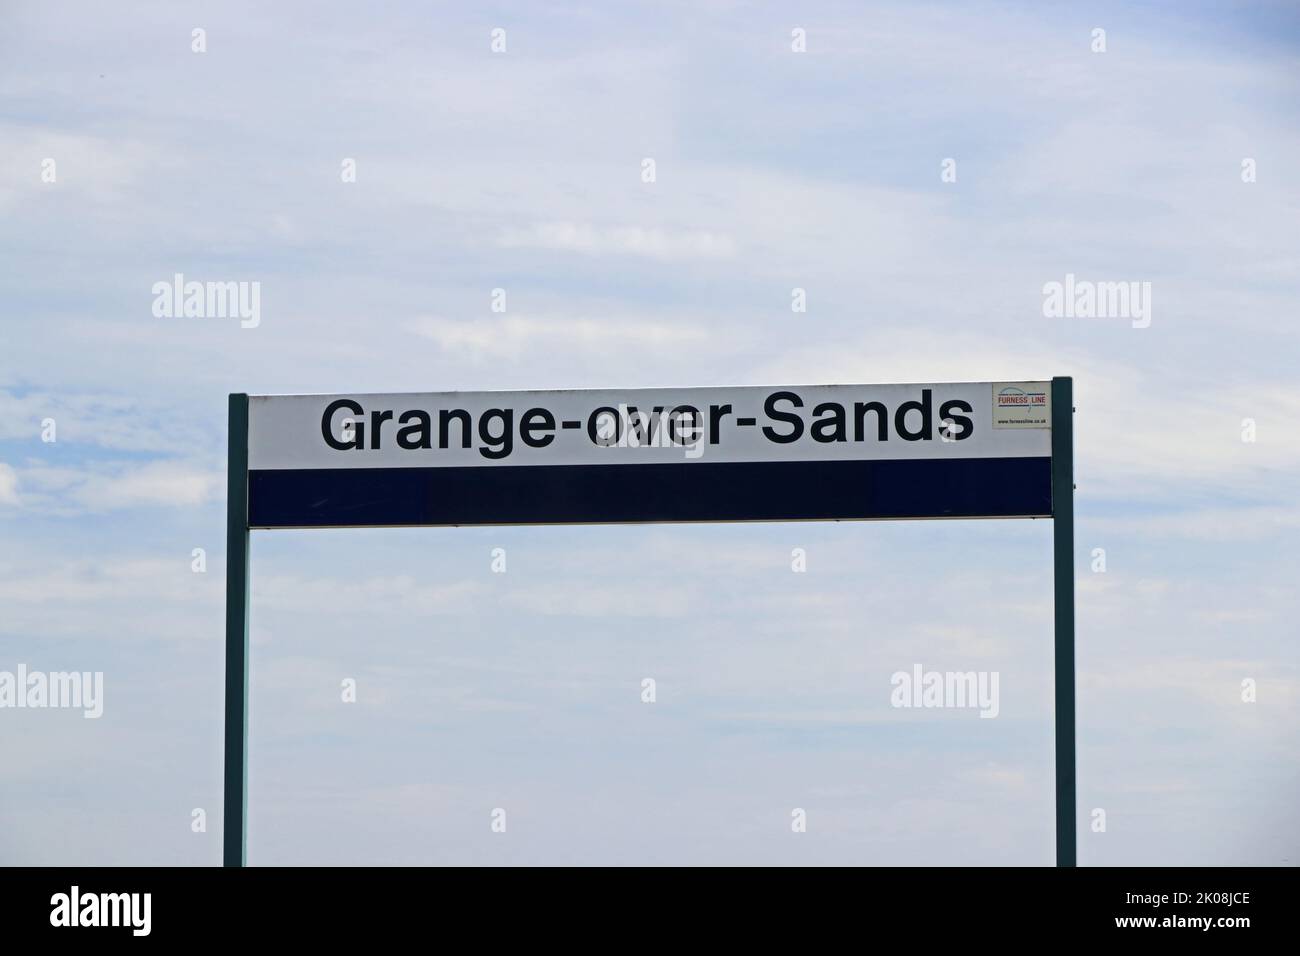 Grange-over-Sands railway station sign Stock Photo